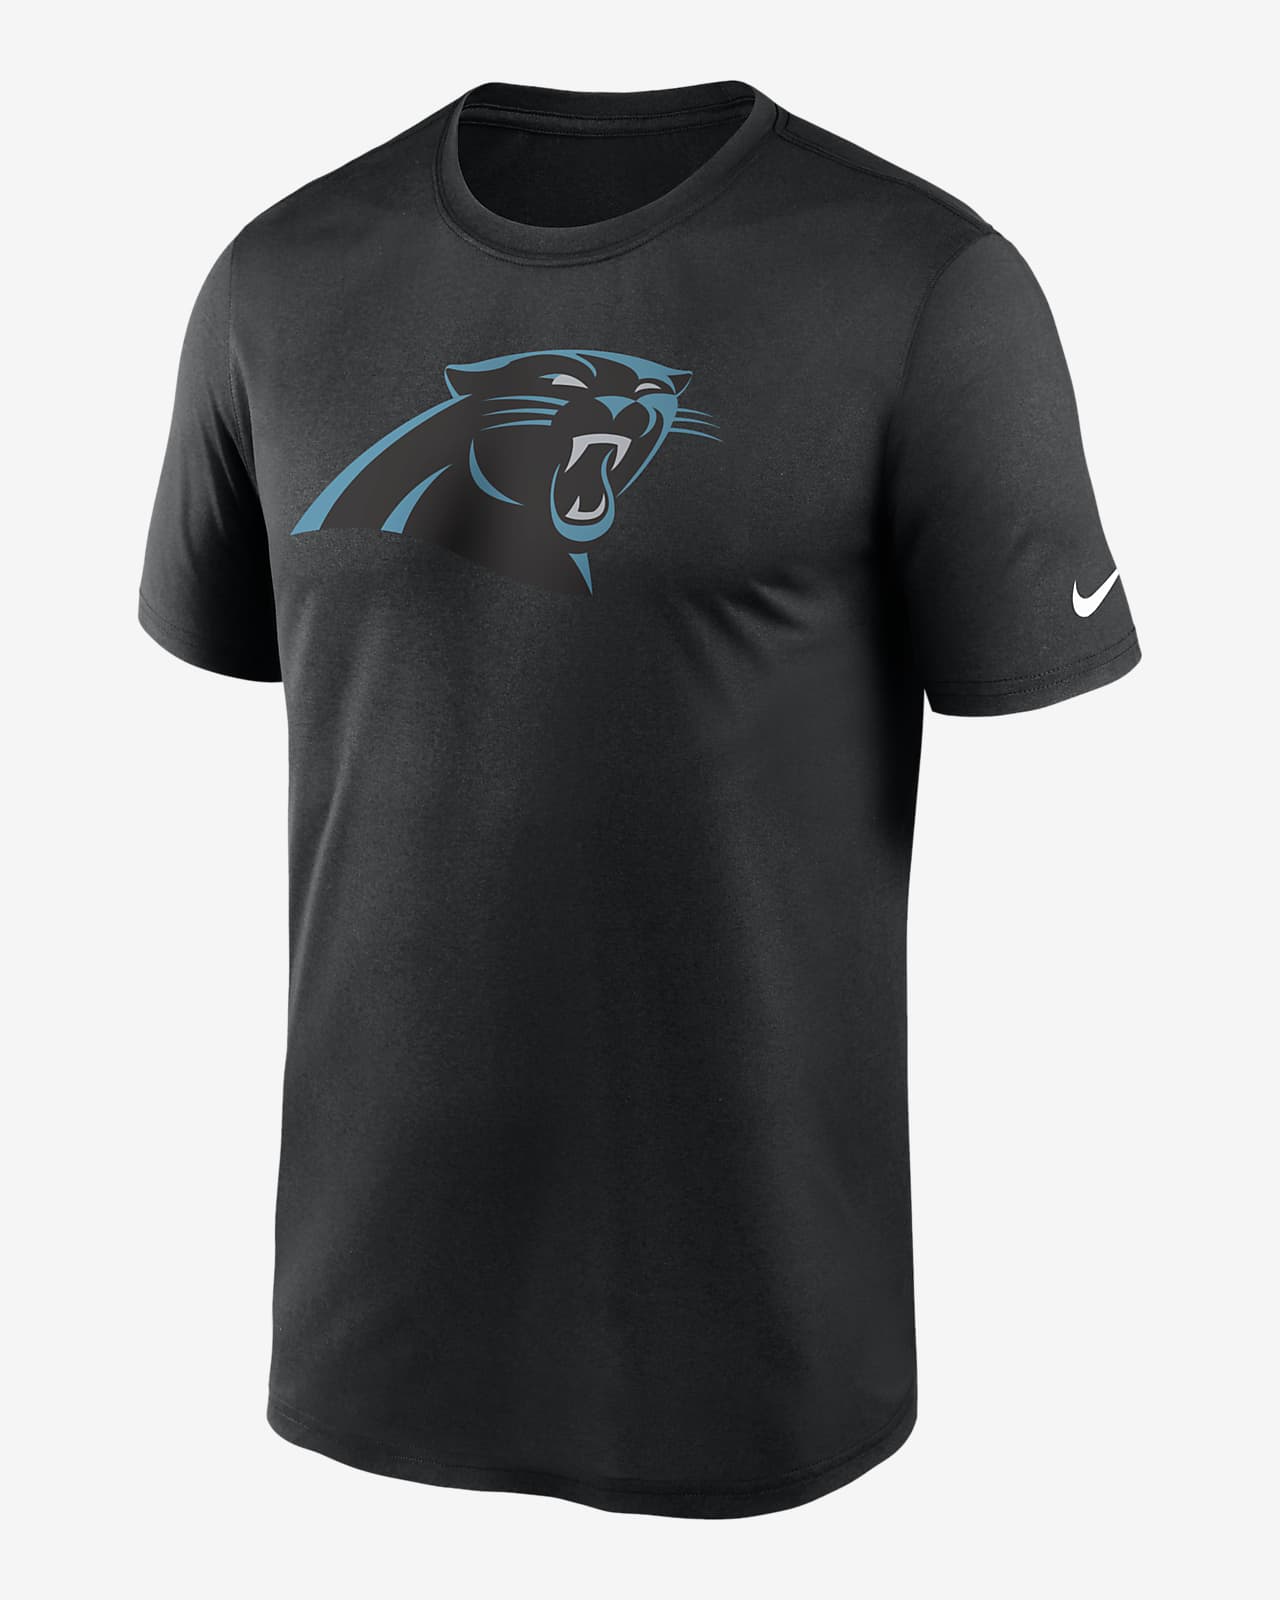 Nike Dri-FIT Logo Legend (NFL Carolina Panthers) Men's T-Shirt